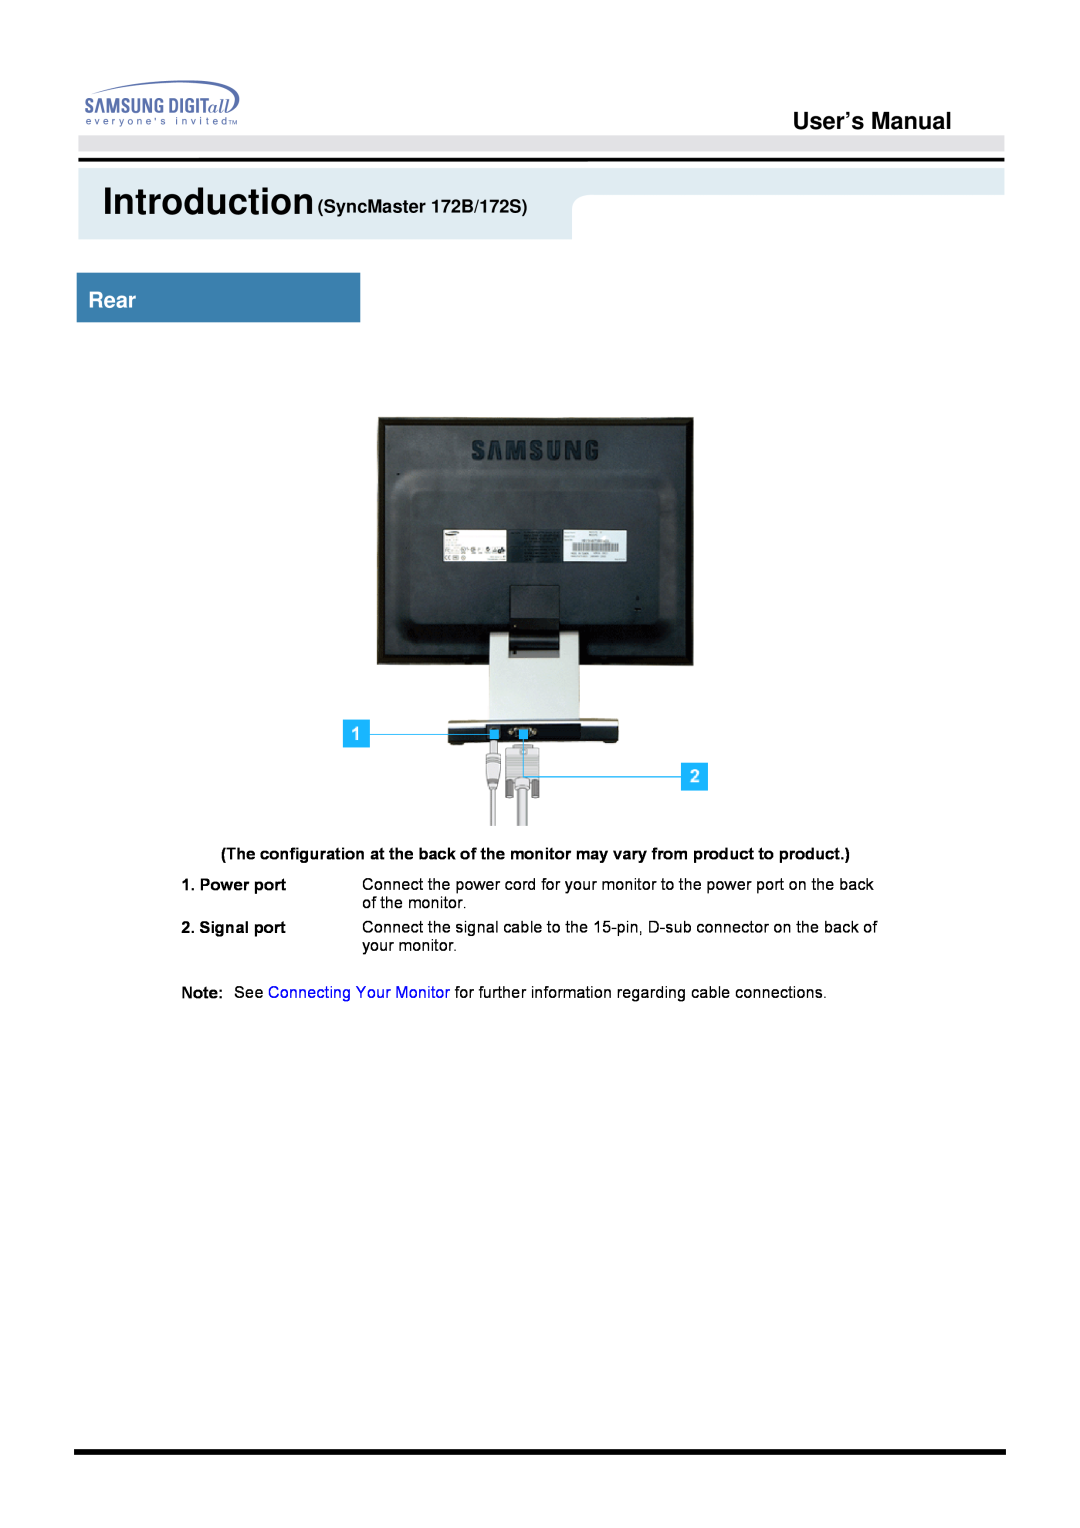 Samsung manual Rear, User’s Manual, IntroductionSyncMaster 172B/172S, Signal port 